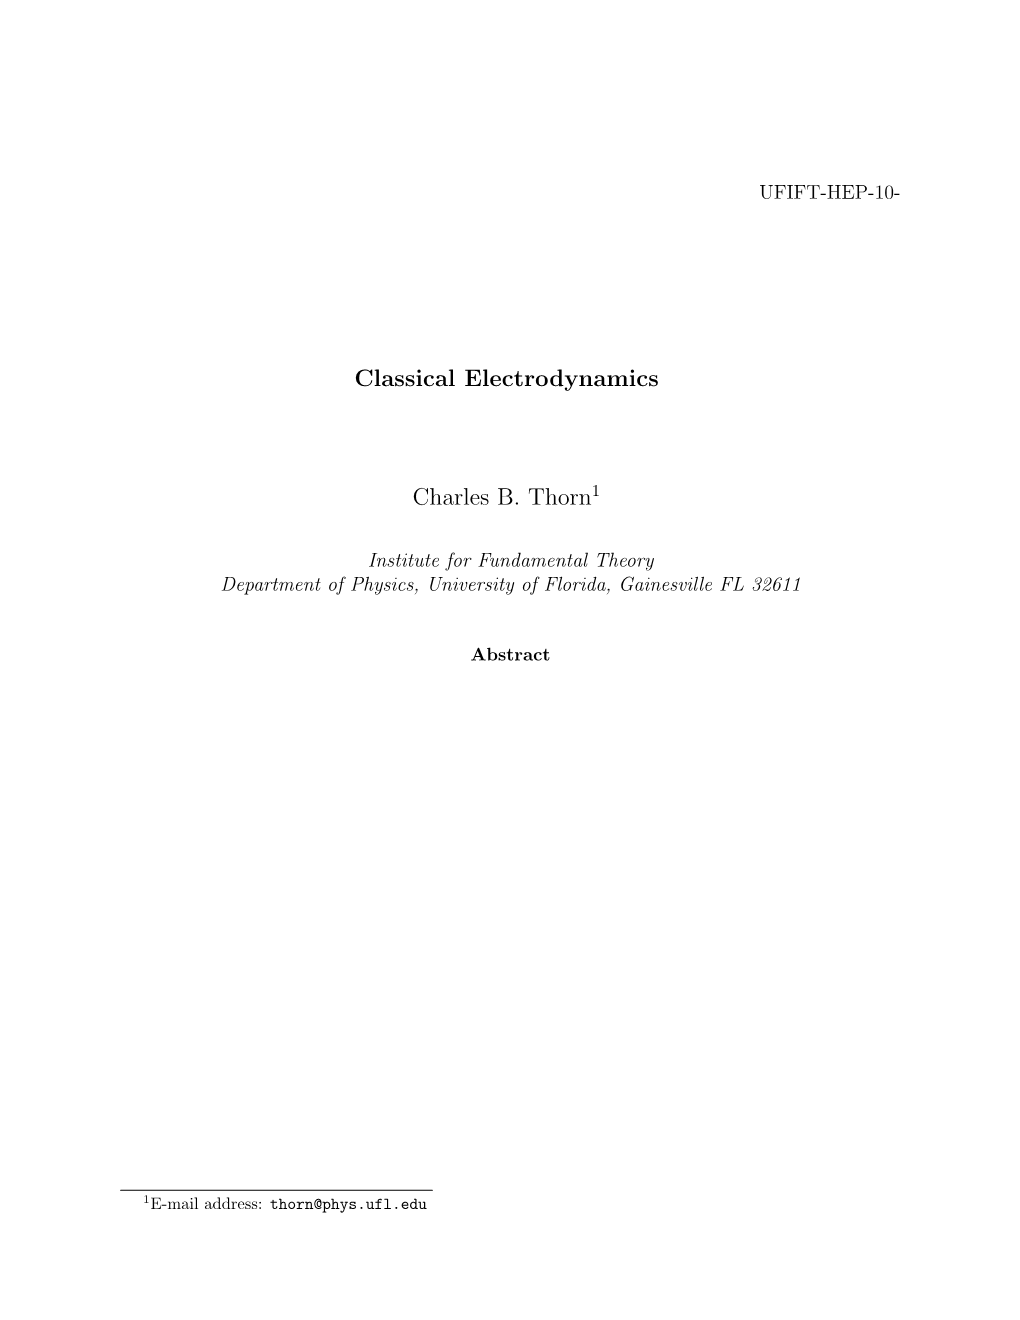 Classical Electrodynamics Charles B. Thorn1